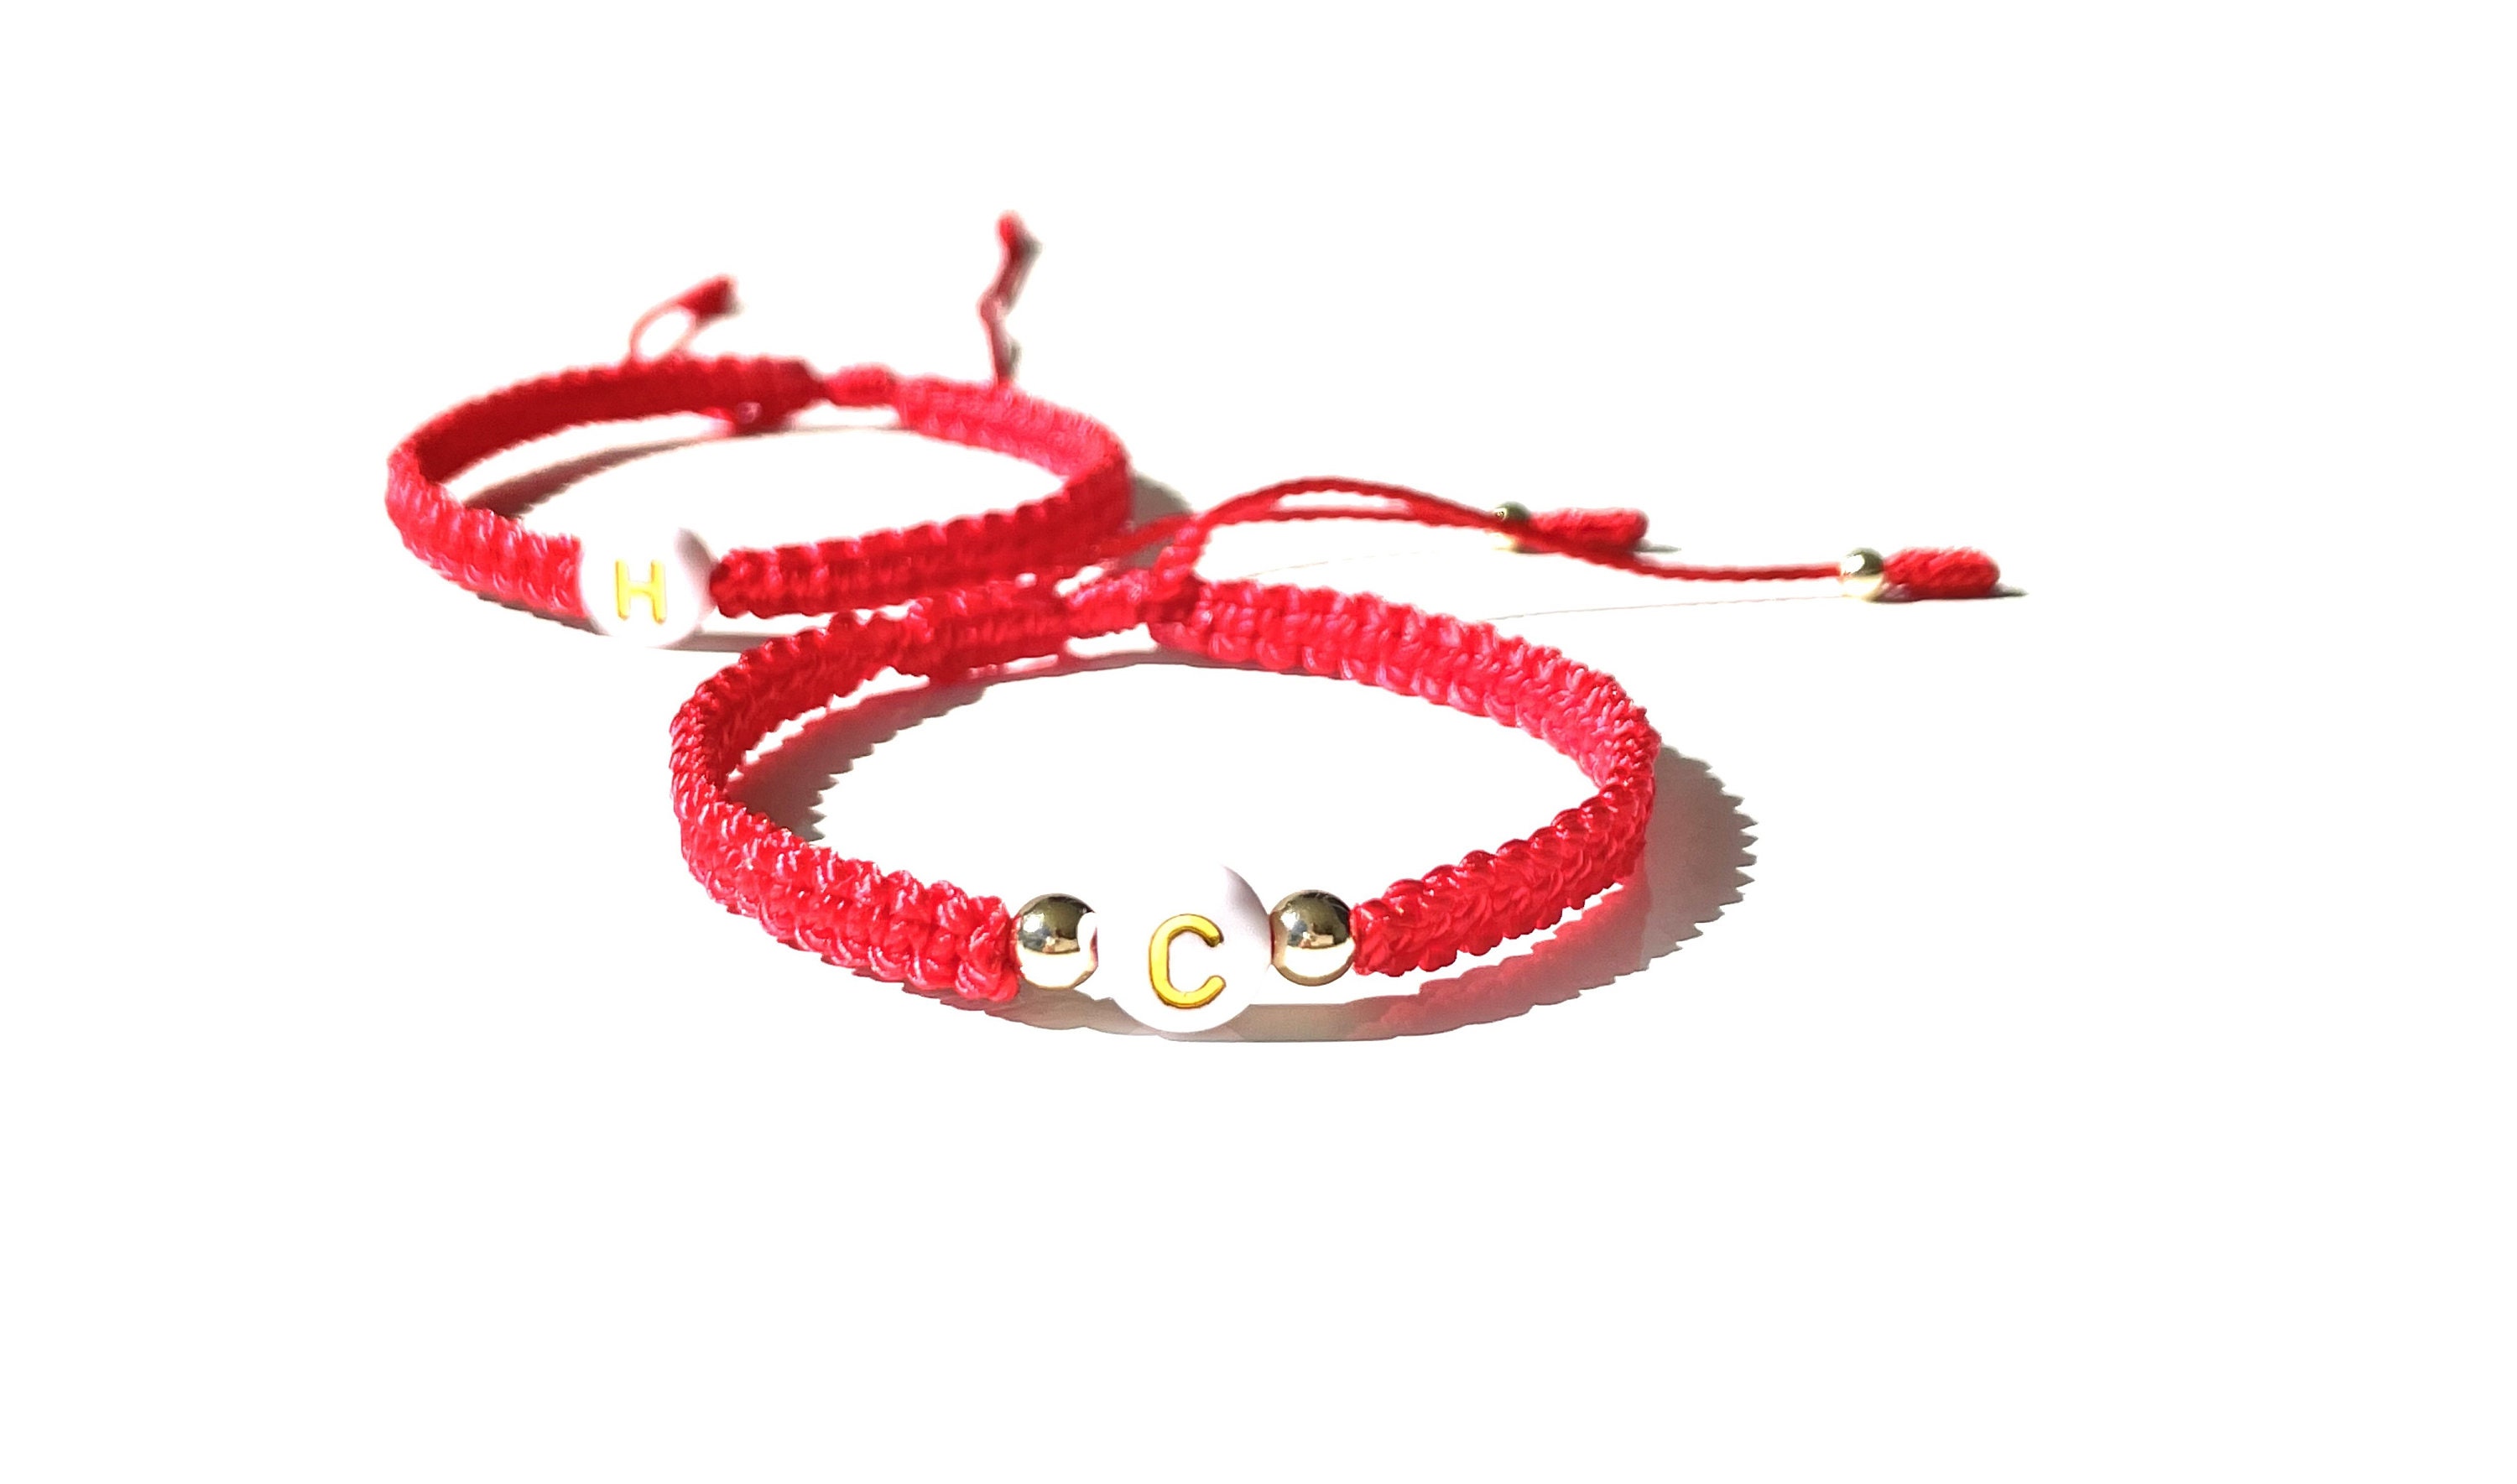  LAMIBEE Initial Letter Z Bracelet, Protection and Lucky String  Bracelet, Black Red Bracelet with Inspirational Card, Heart Link Bracelet  for Girl, Teenage, Friendship (Black, Letter Z) : Handmade Products